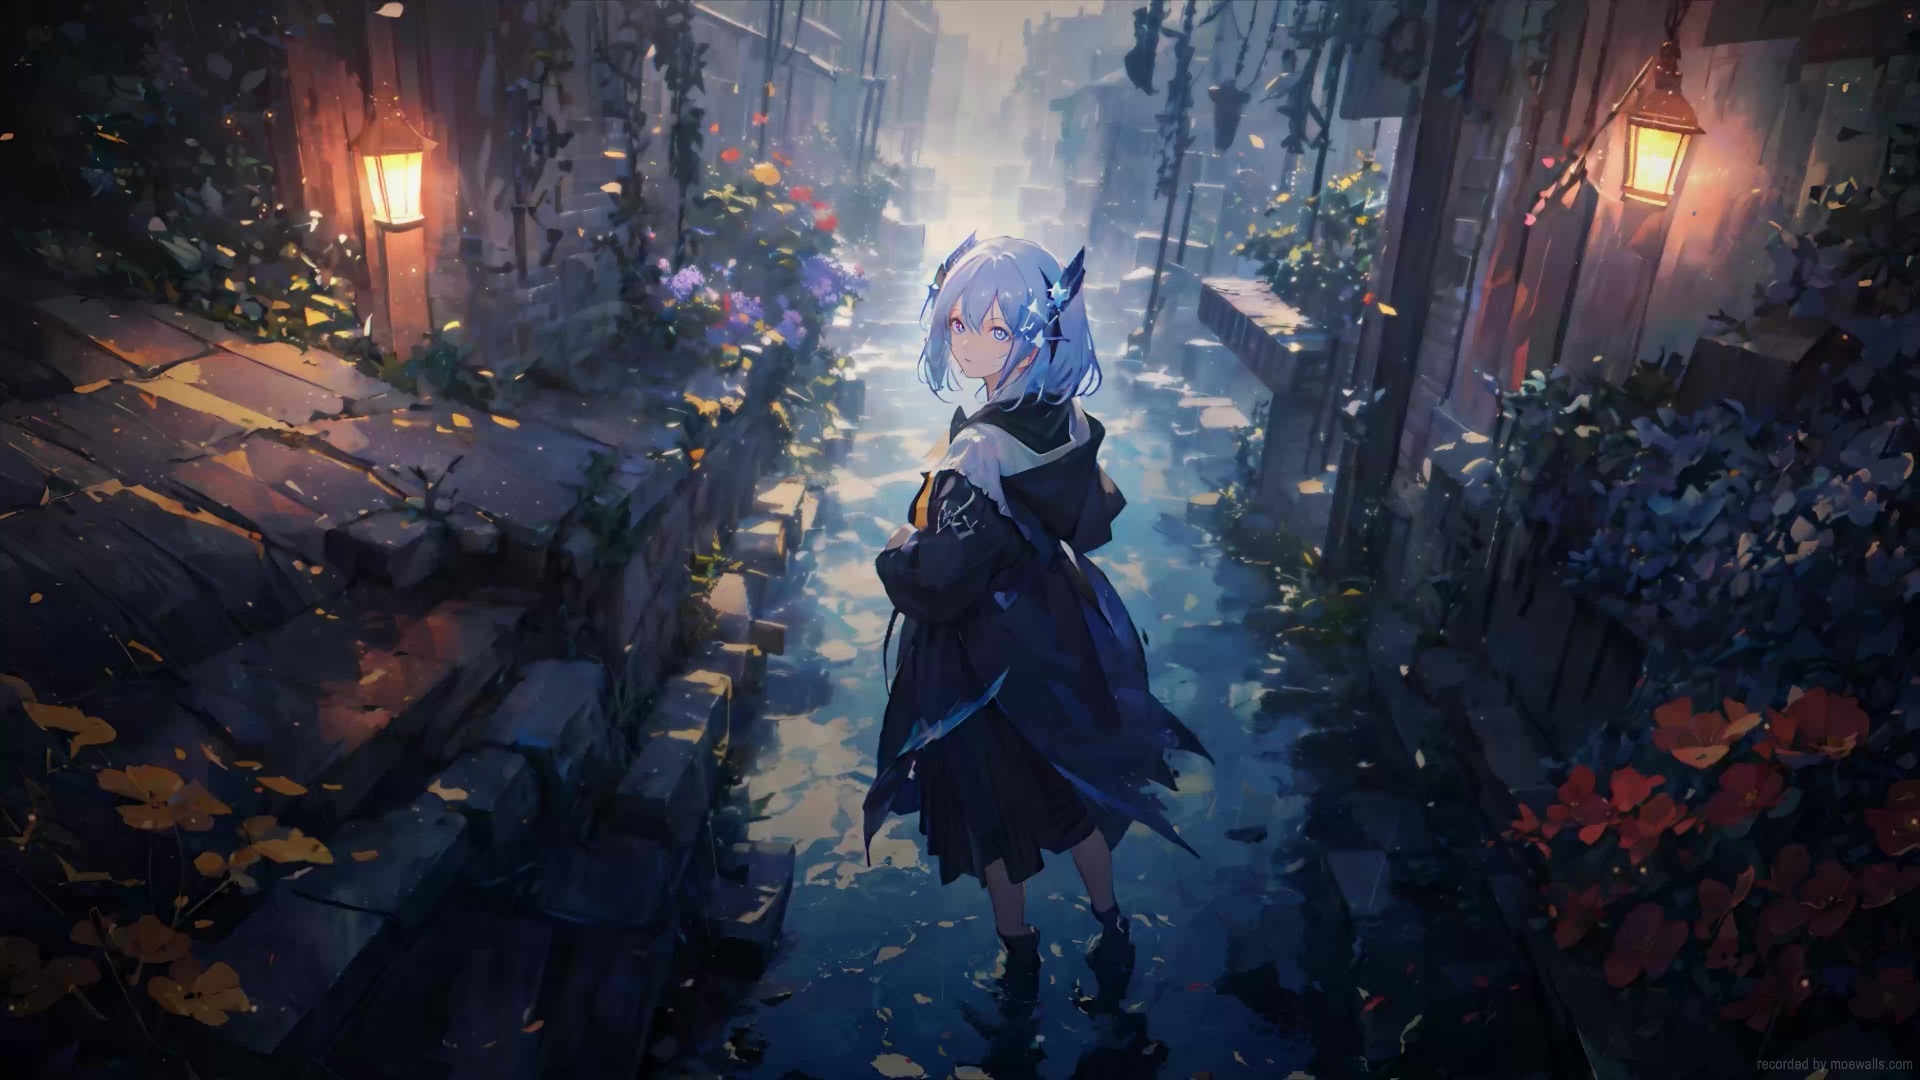 Alley, JP NIK | Anime background, Anime city, City background